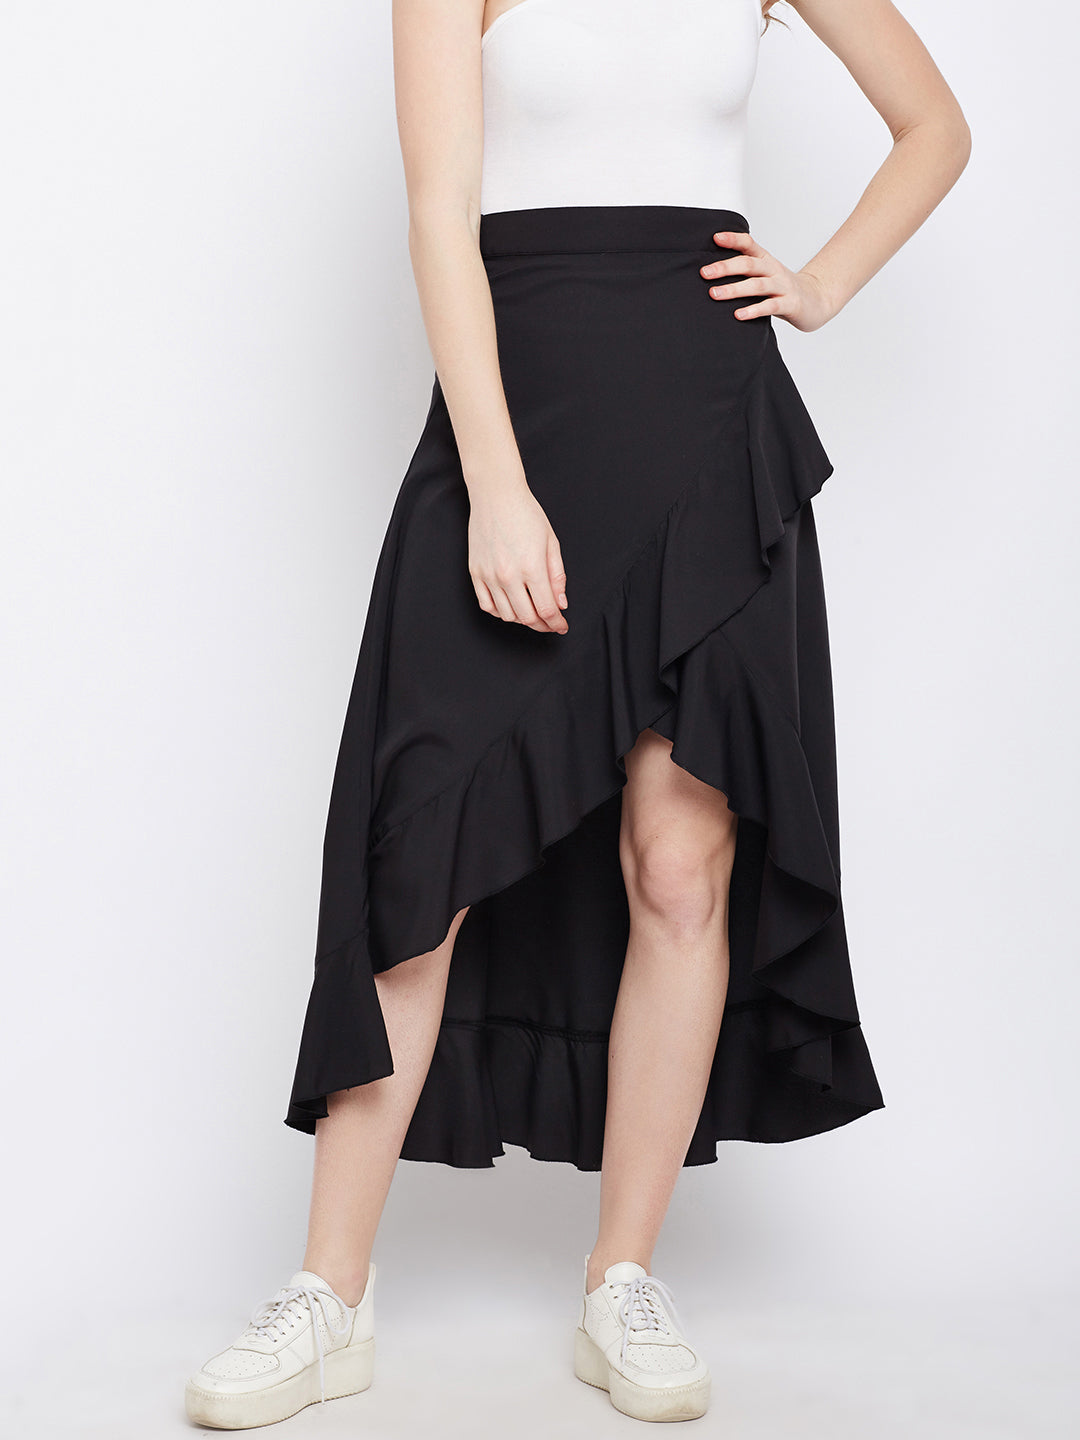 Berrylush Women Solid Black Waist Tie-Up Ruffled High-Low Wrap Maxi Skirt